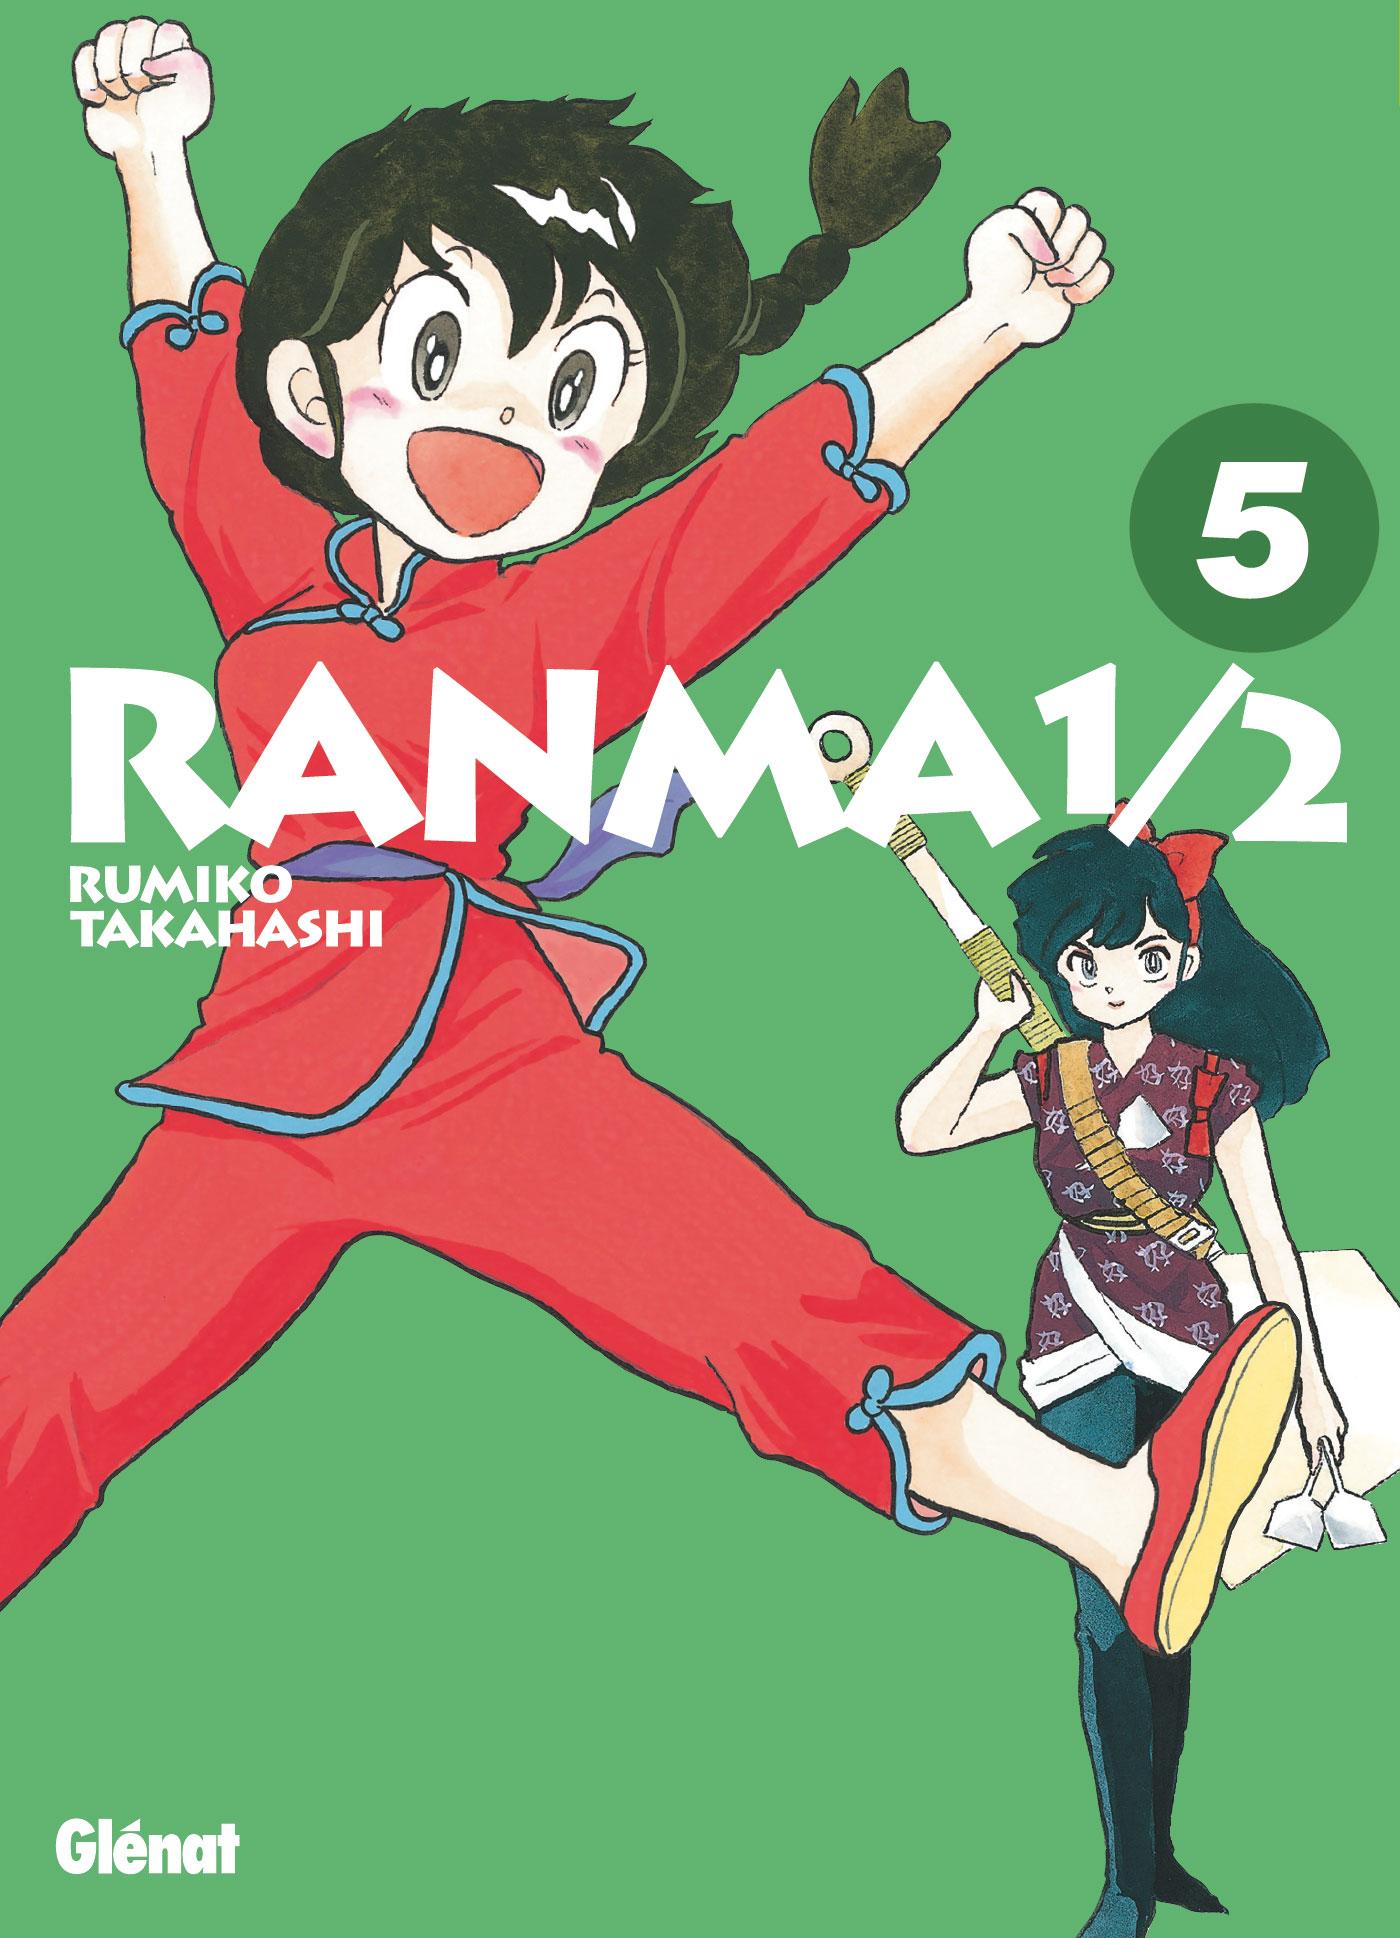 Couverture du manga "Ranma 1/2" de Rumiko Takahashi. [FIBD 2019]